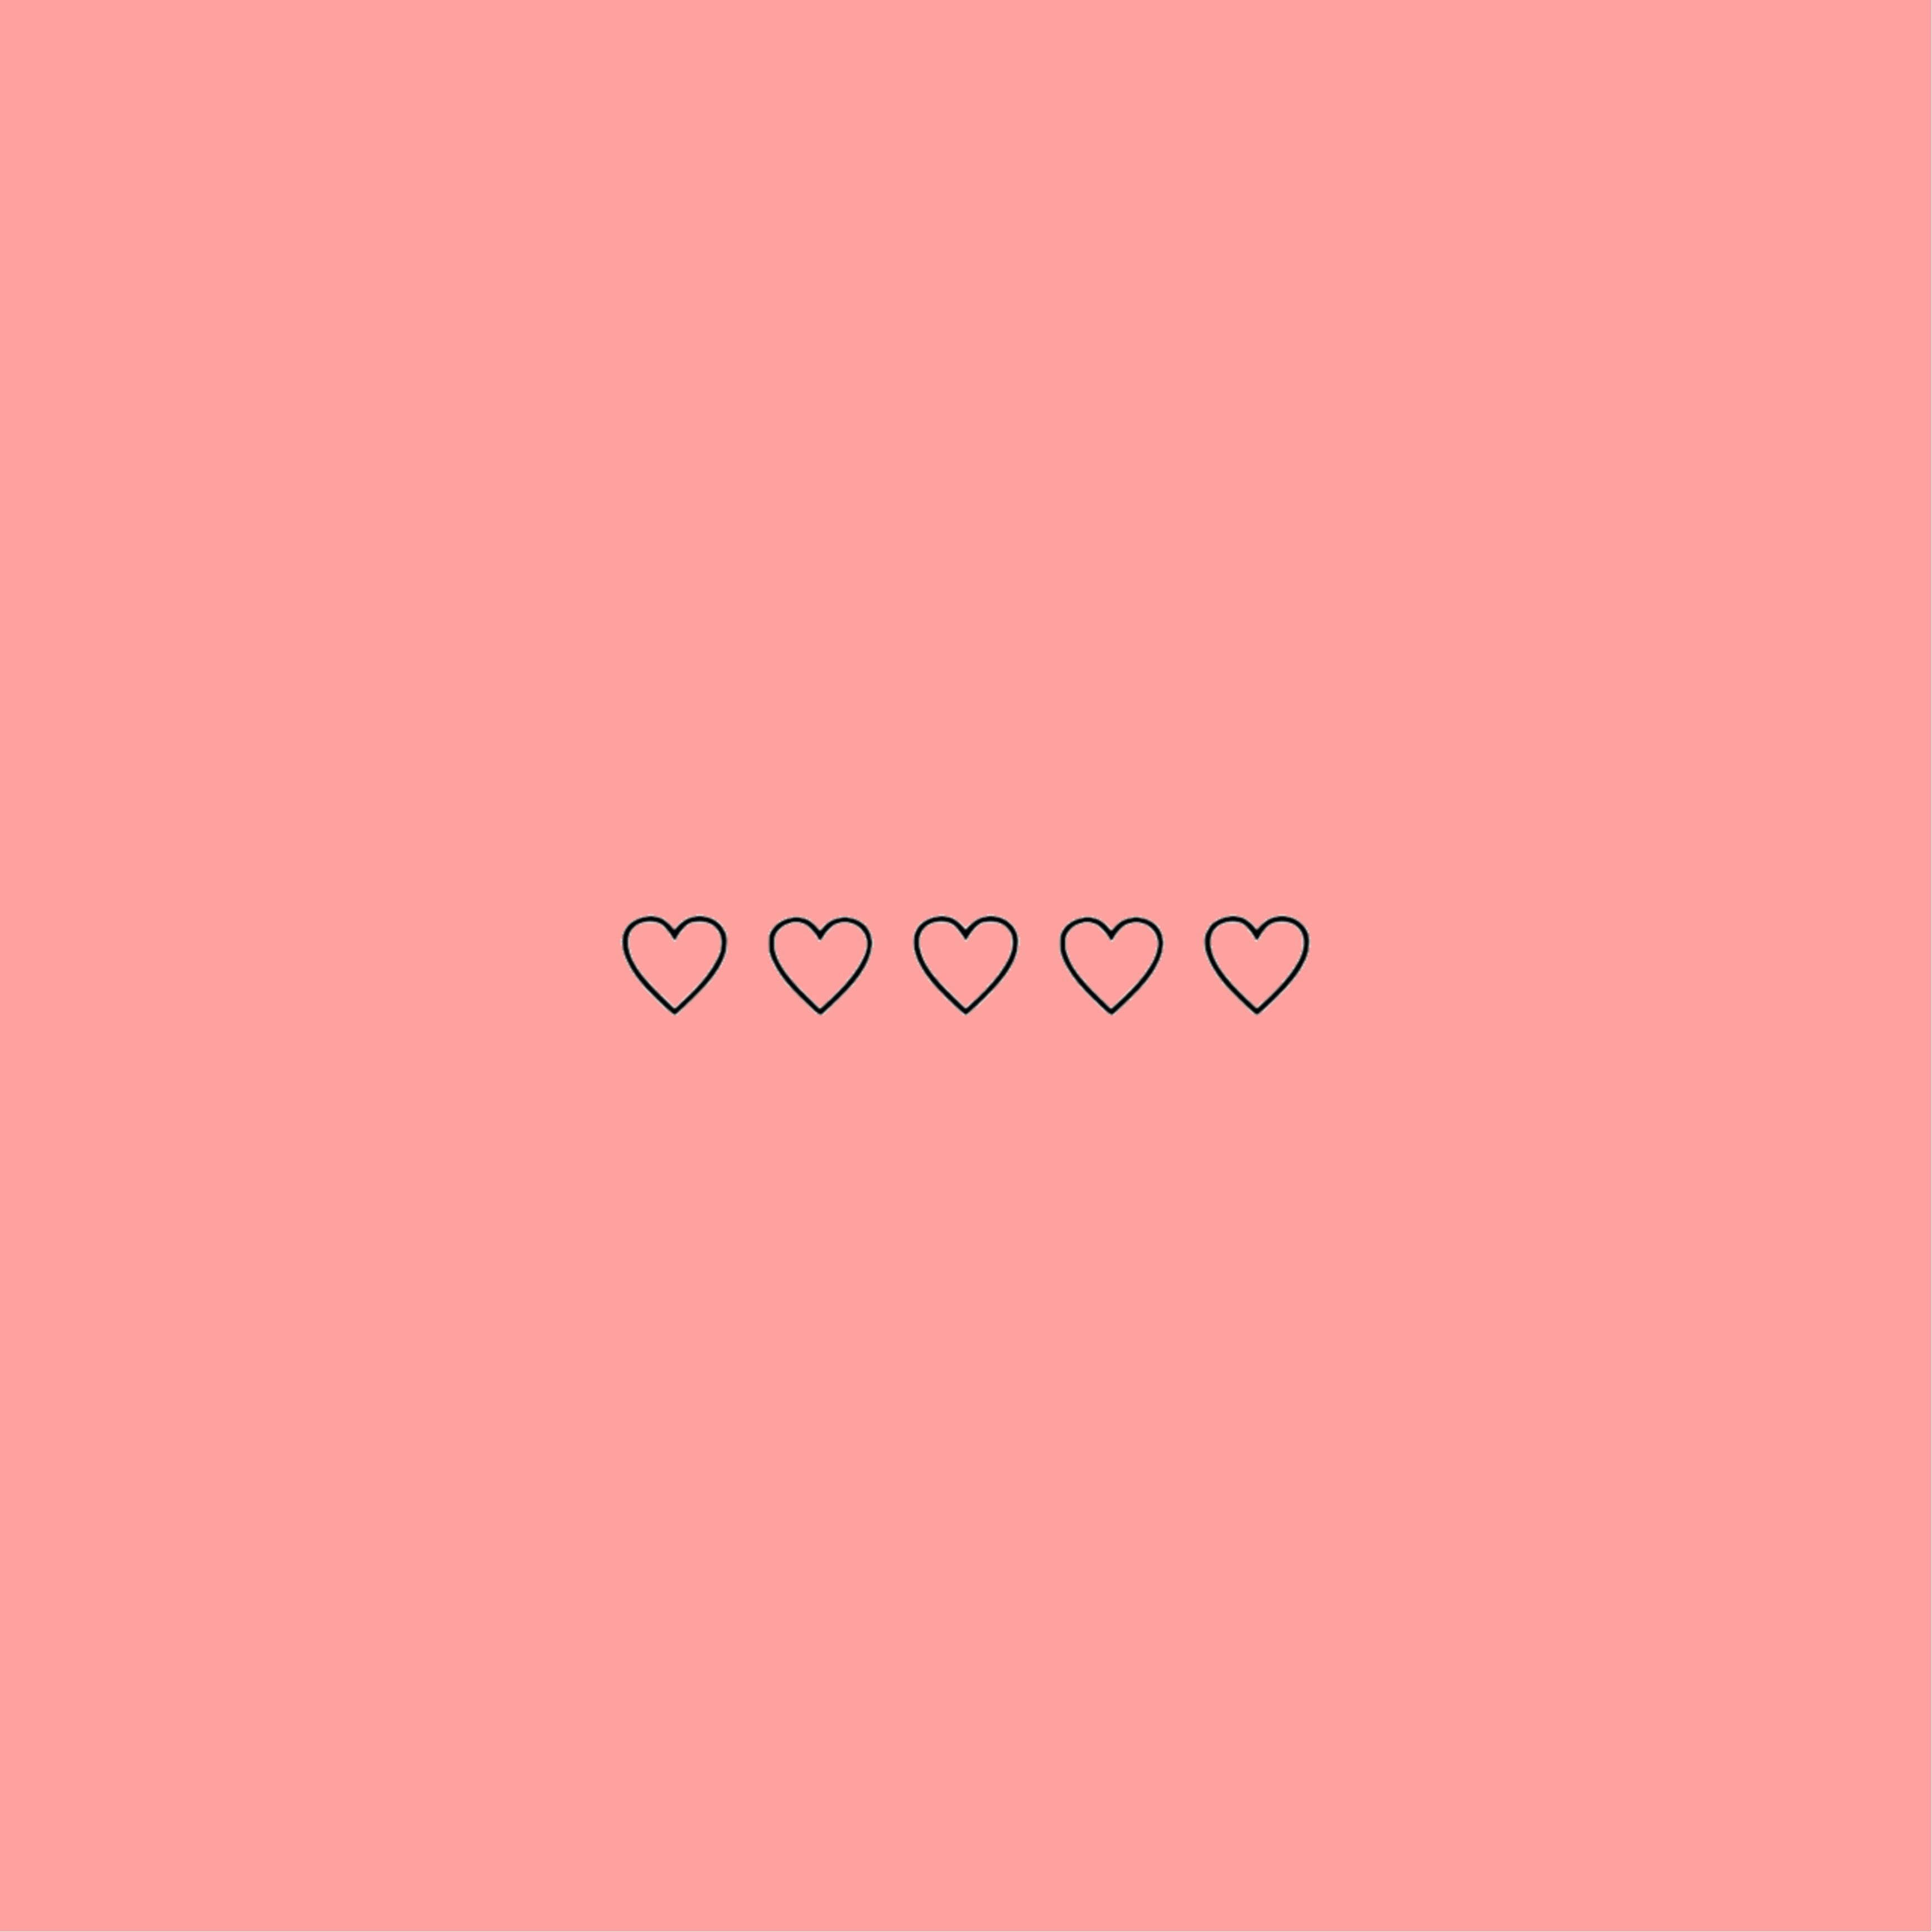 Cute Pink Aesthetic Black Hearts Wallpaper